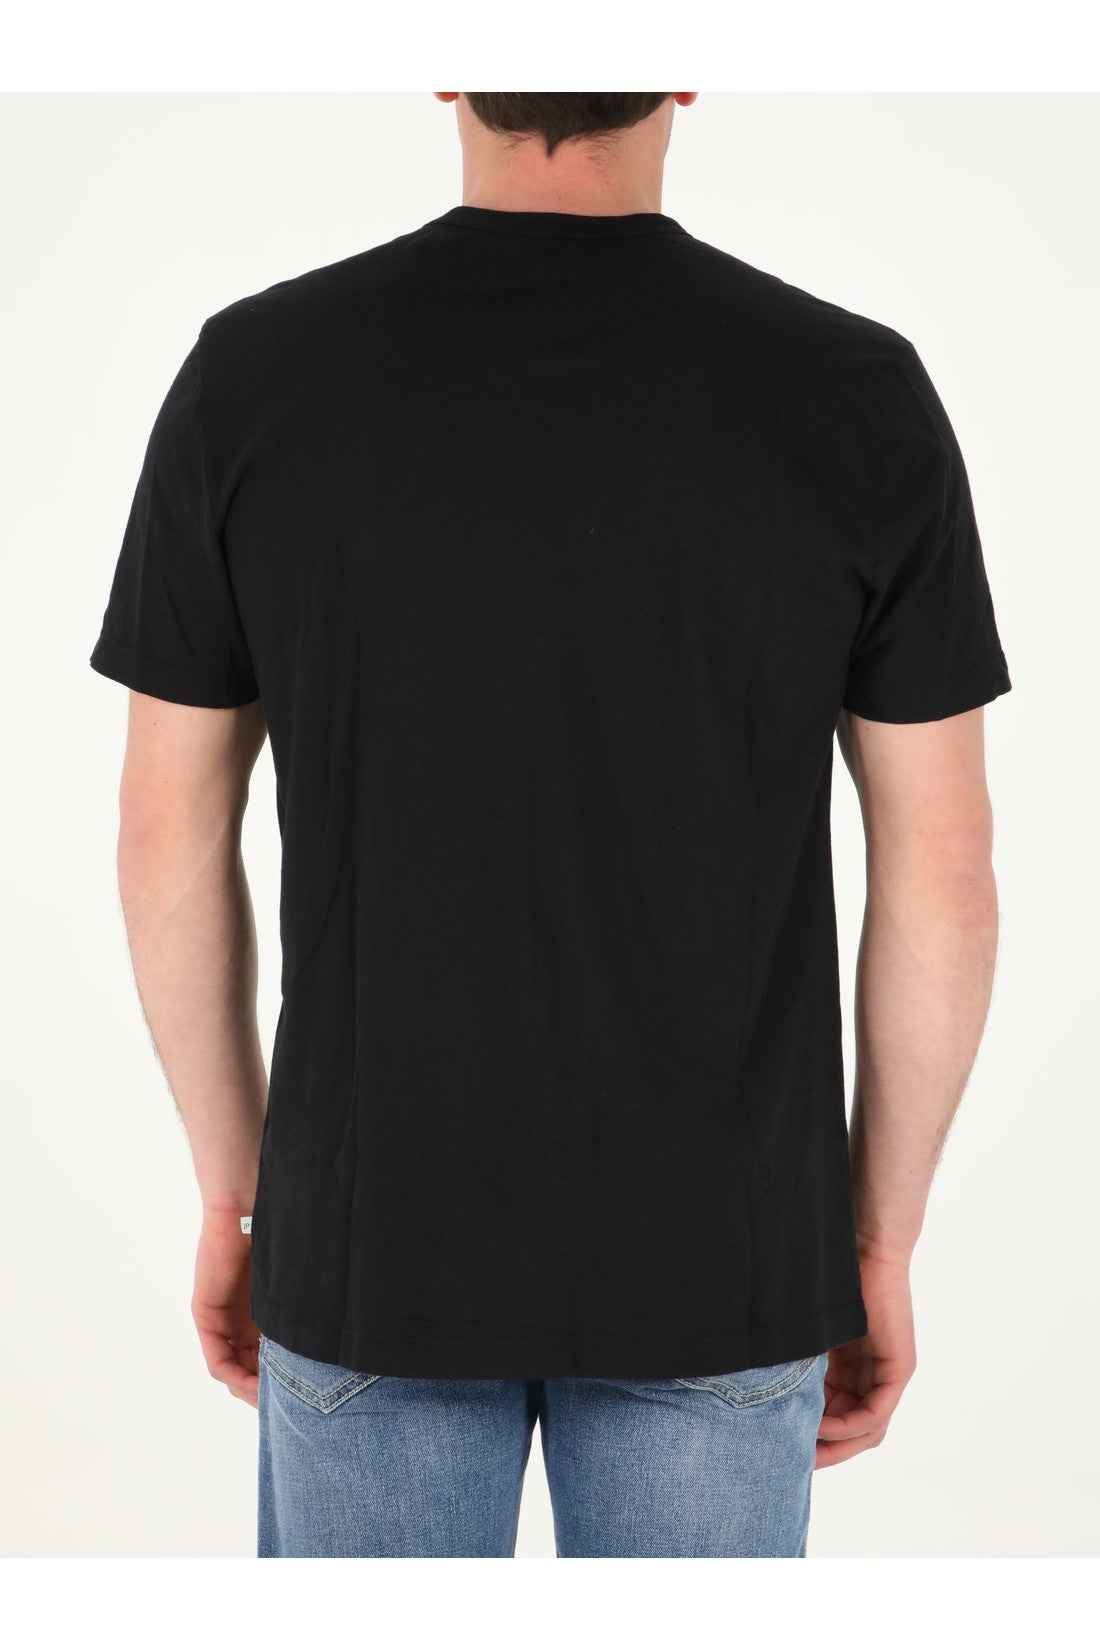 Black cotton t-shirt